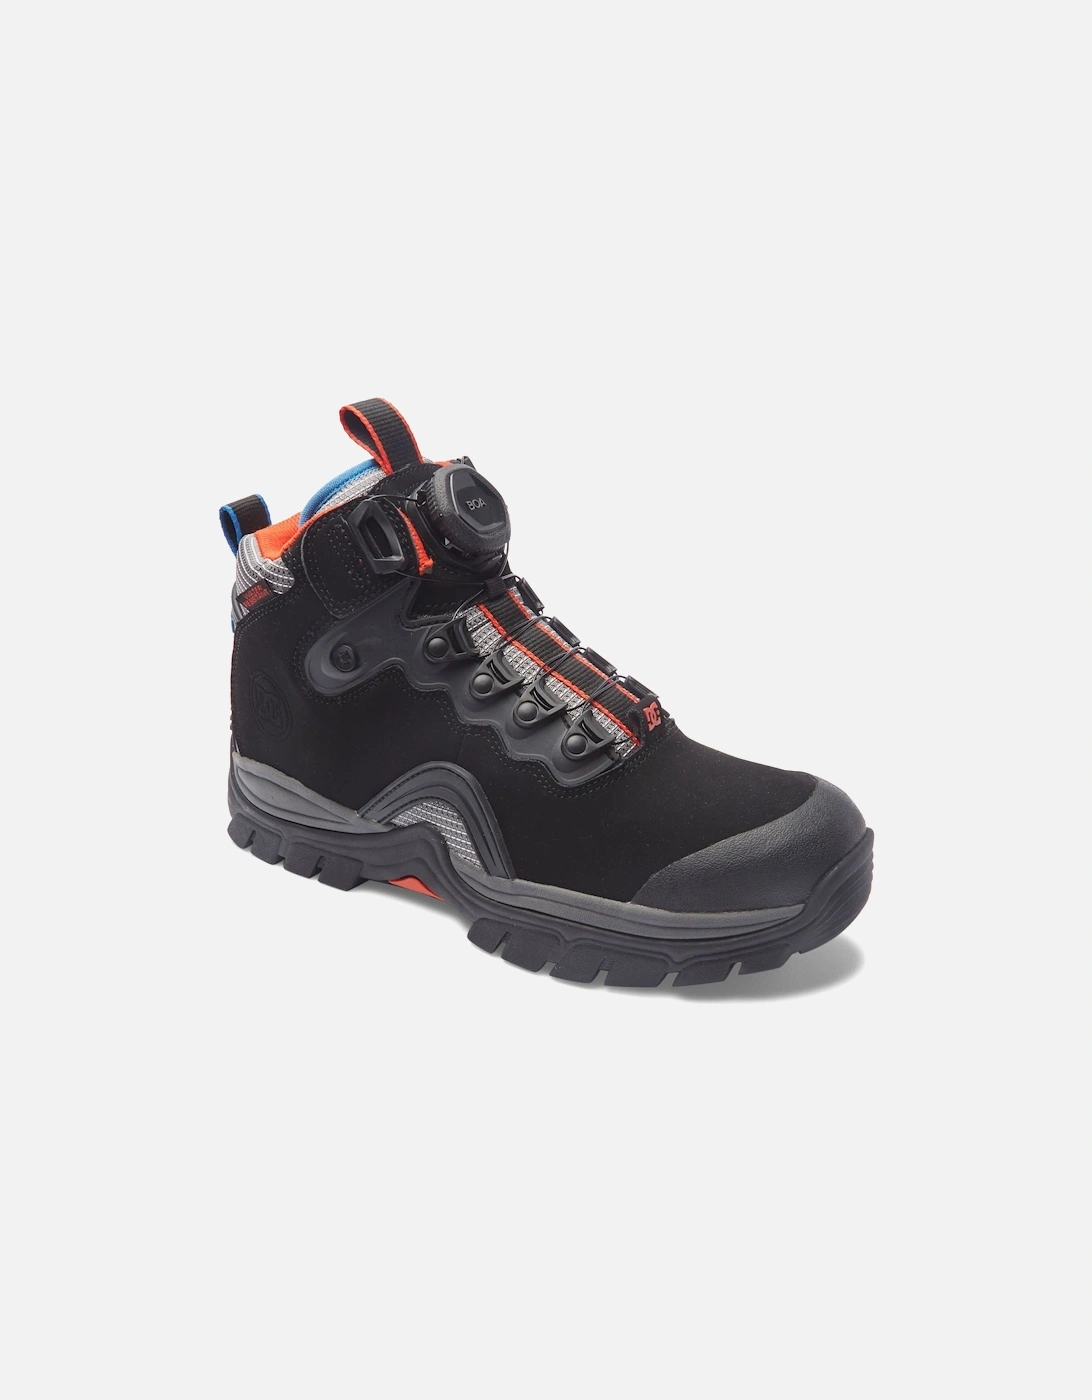 Mens Navigator LX Leather Waterproof Boots - Black, 9 of 8